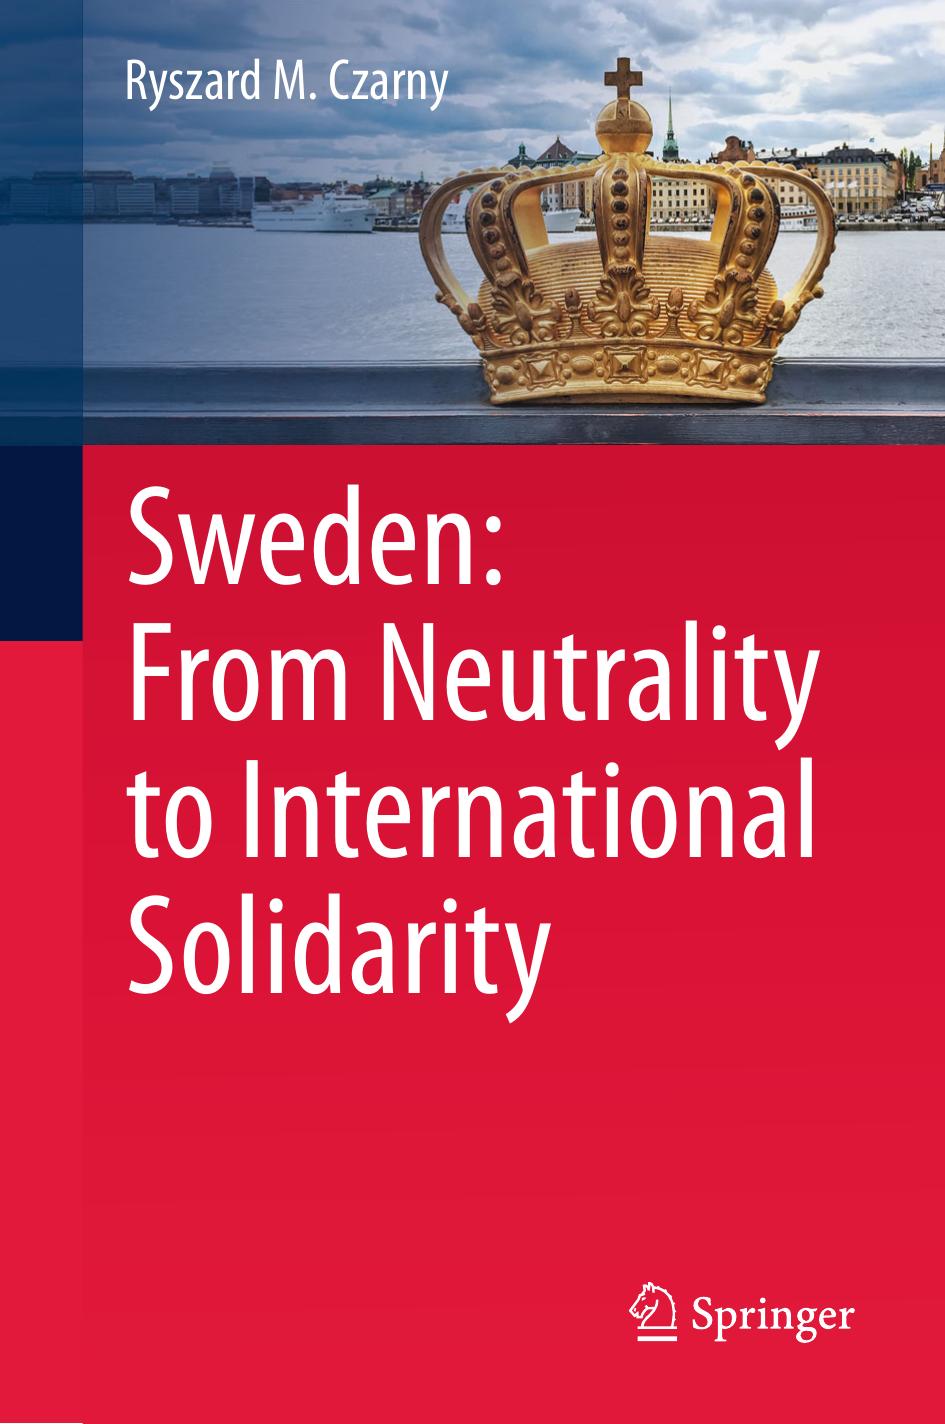 Sweden: From Neutrality to International Solidarity by Ryszard M. Czarny